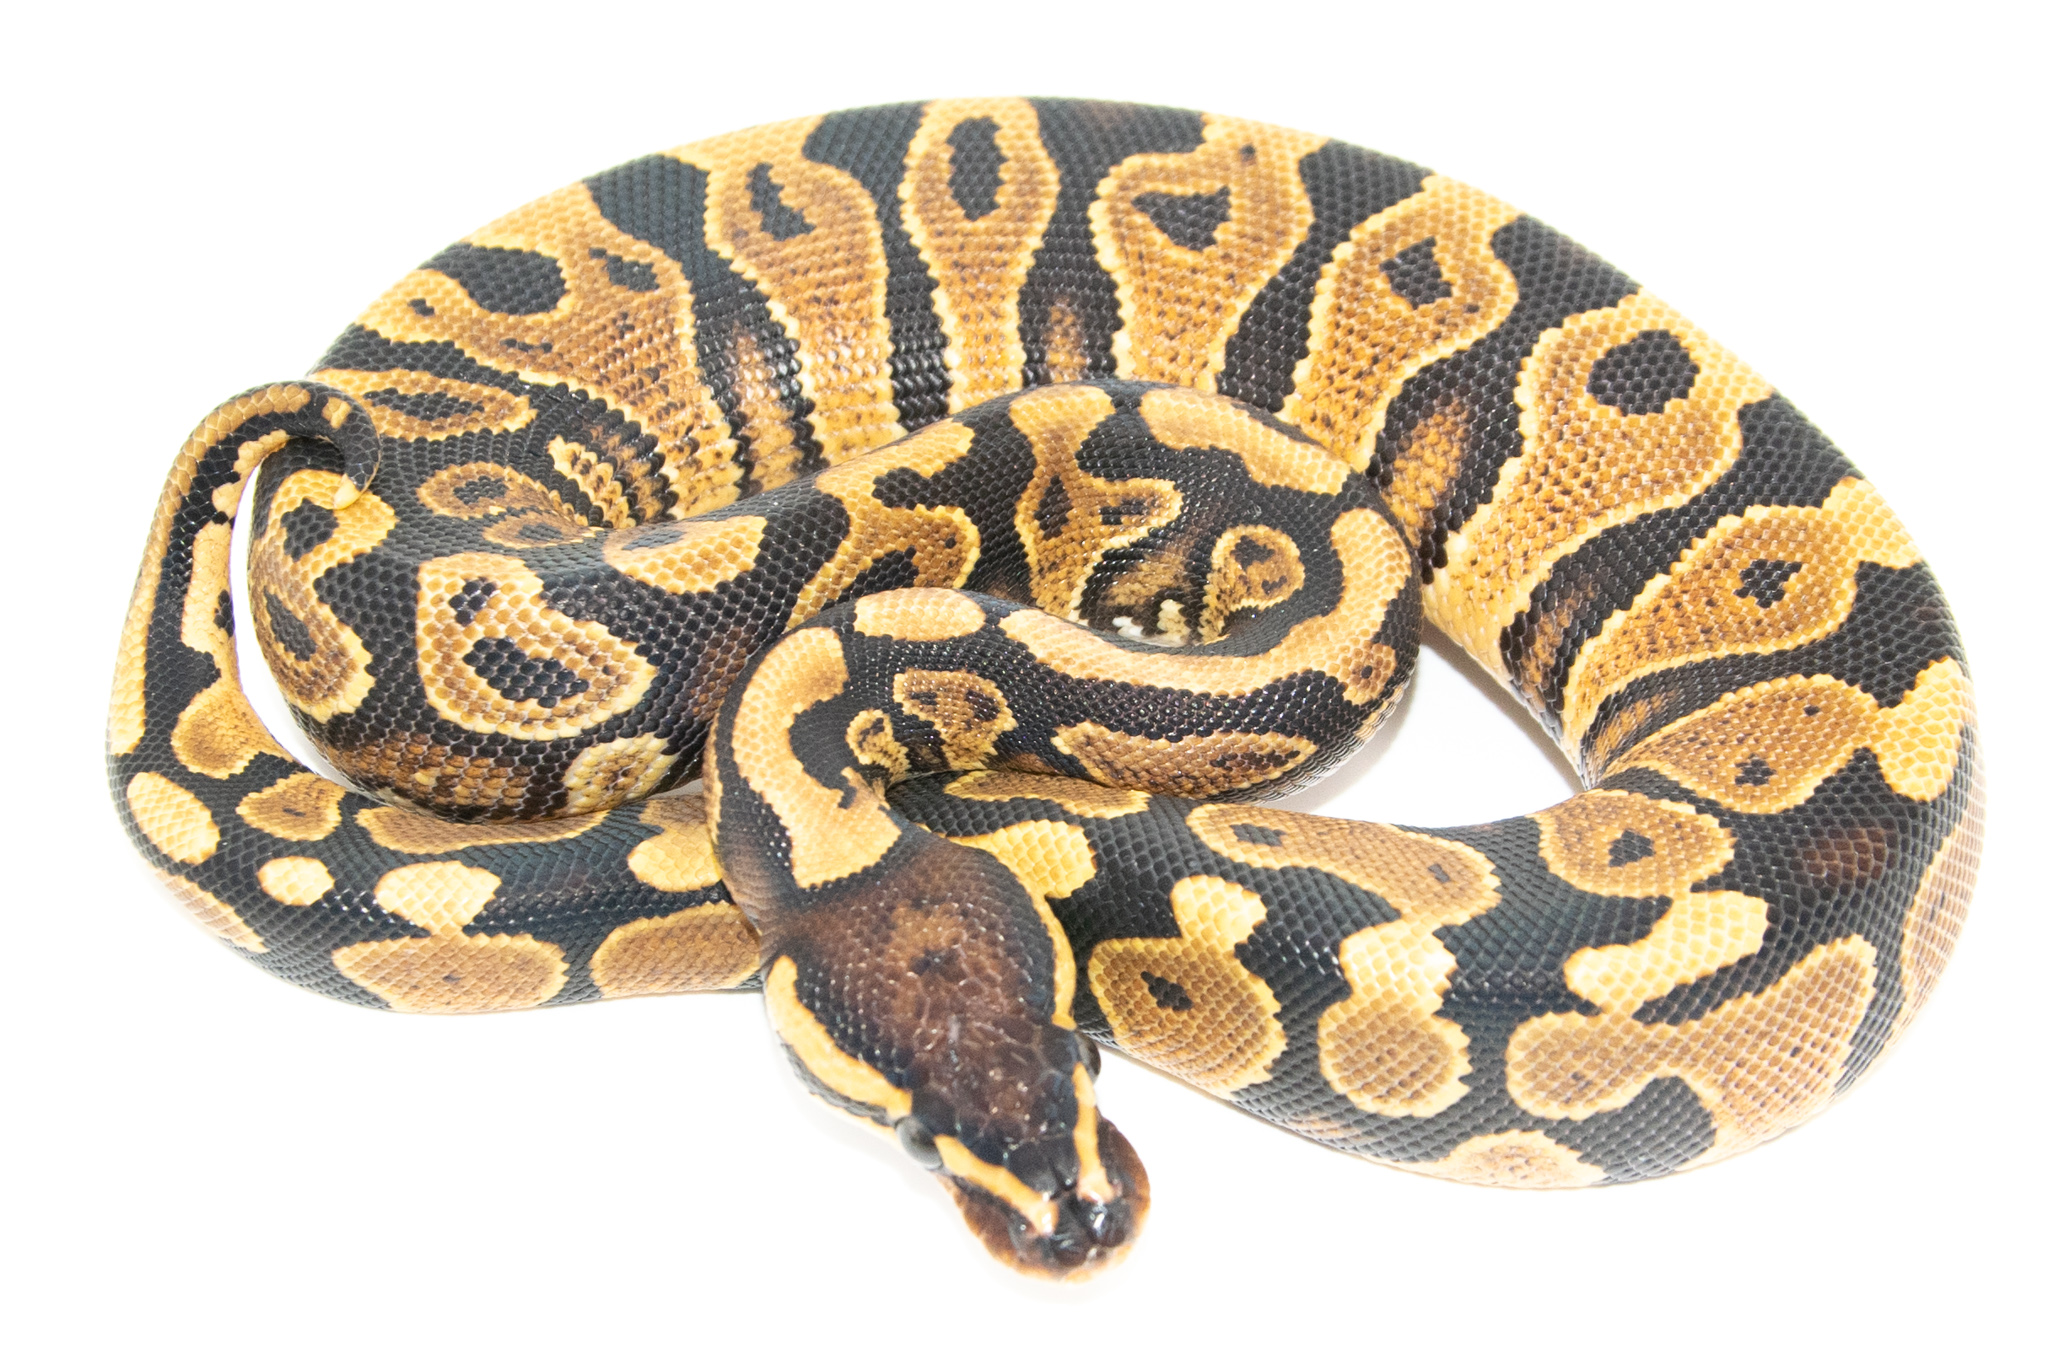 Python royal - Python regius Yellow Belly